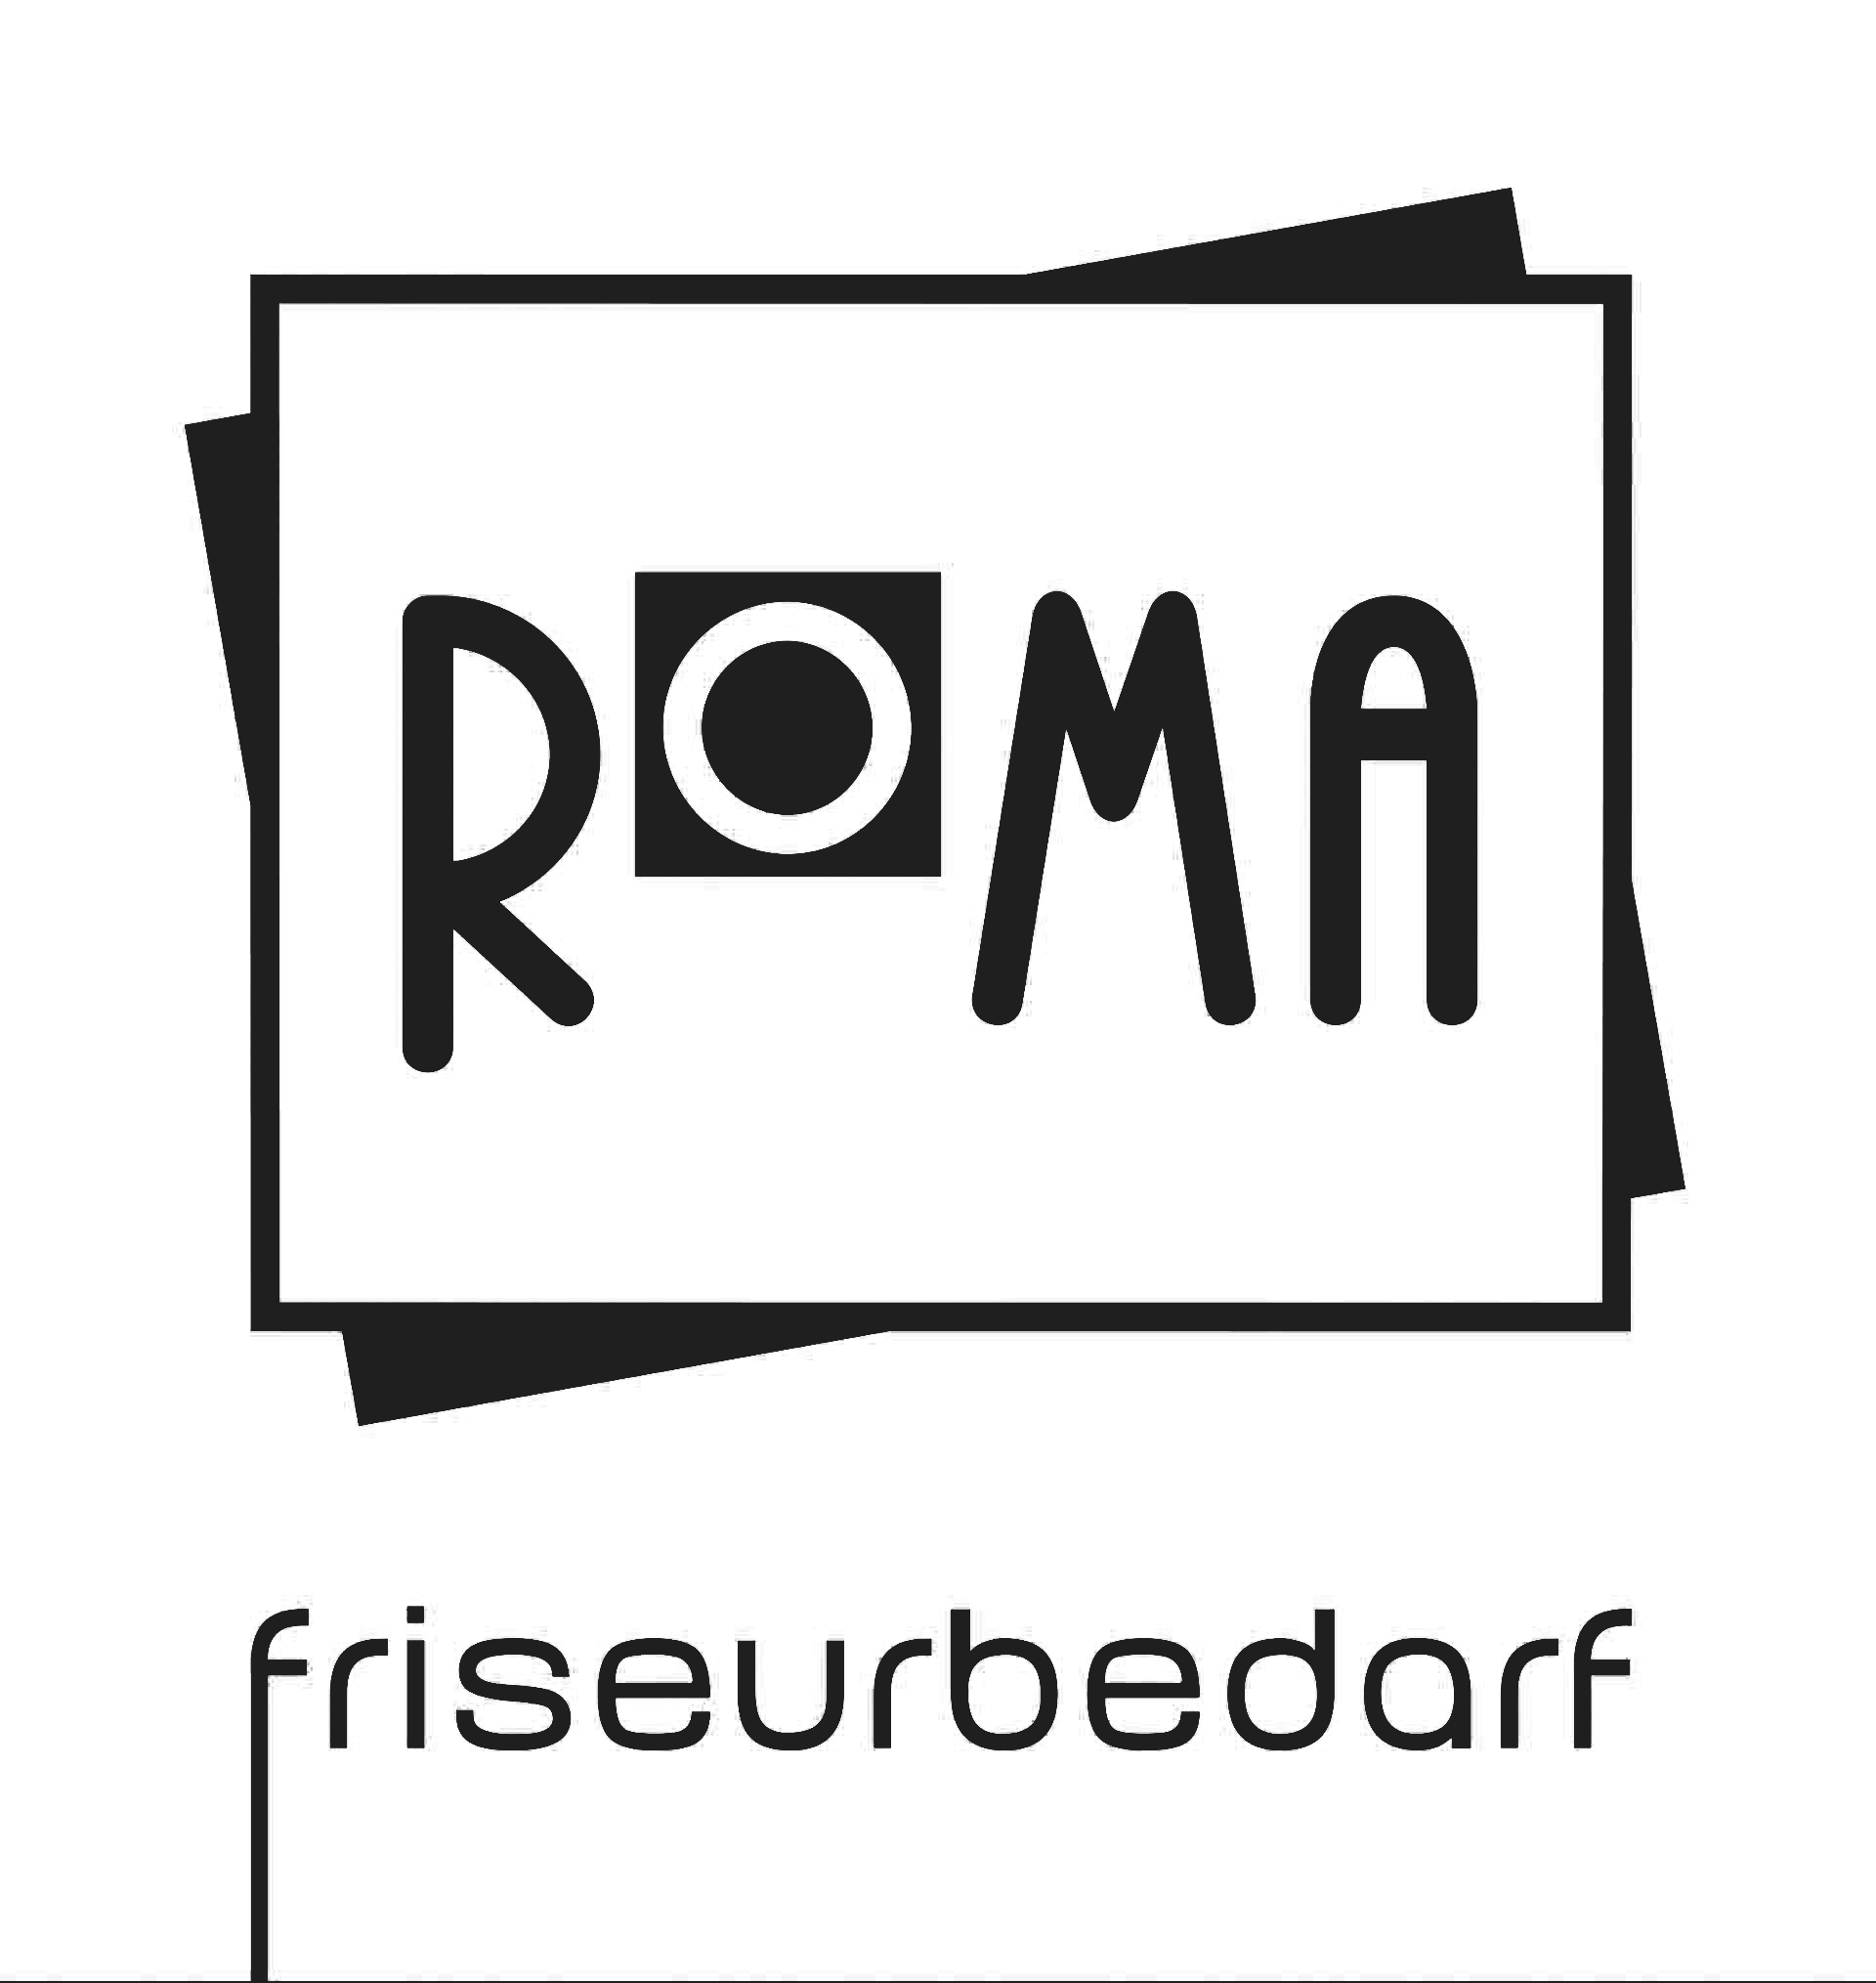 Roma Friseurbedarf